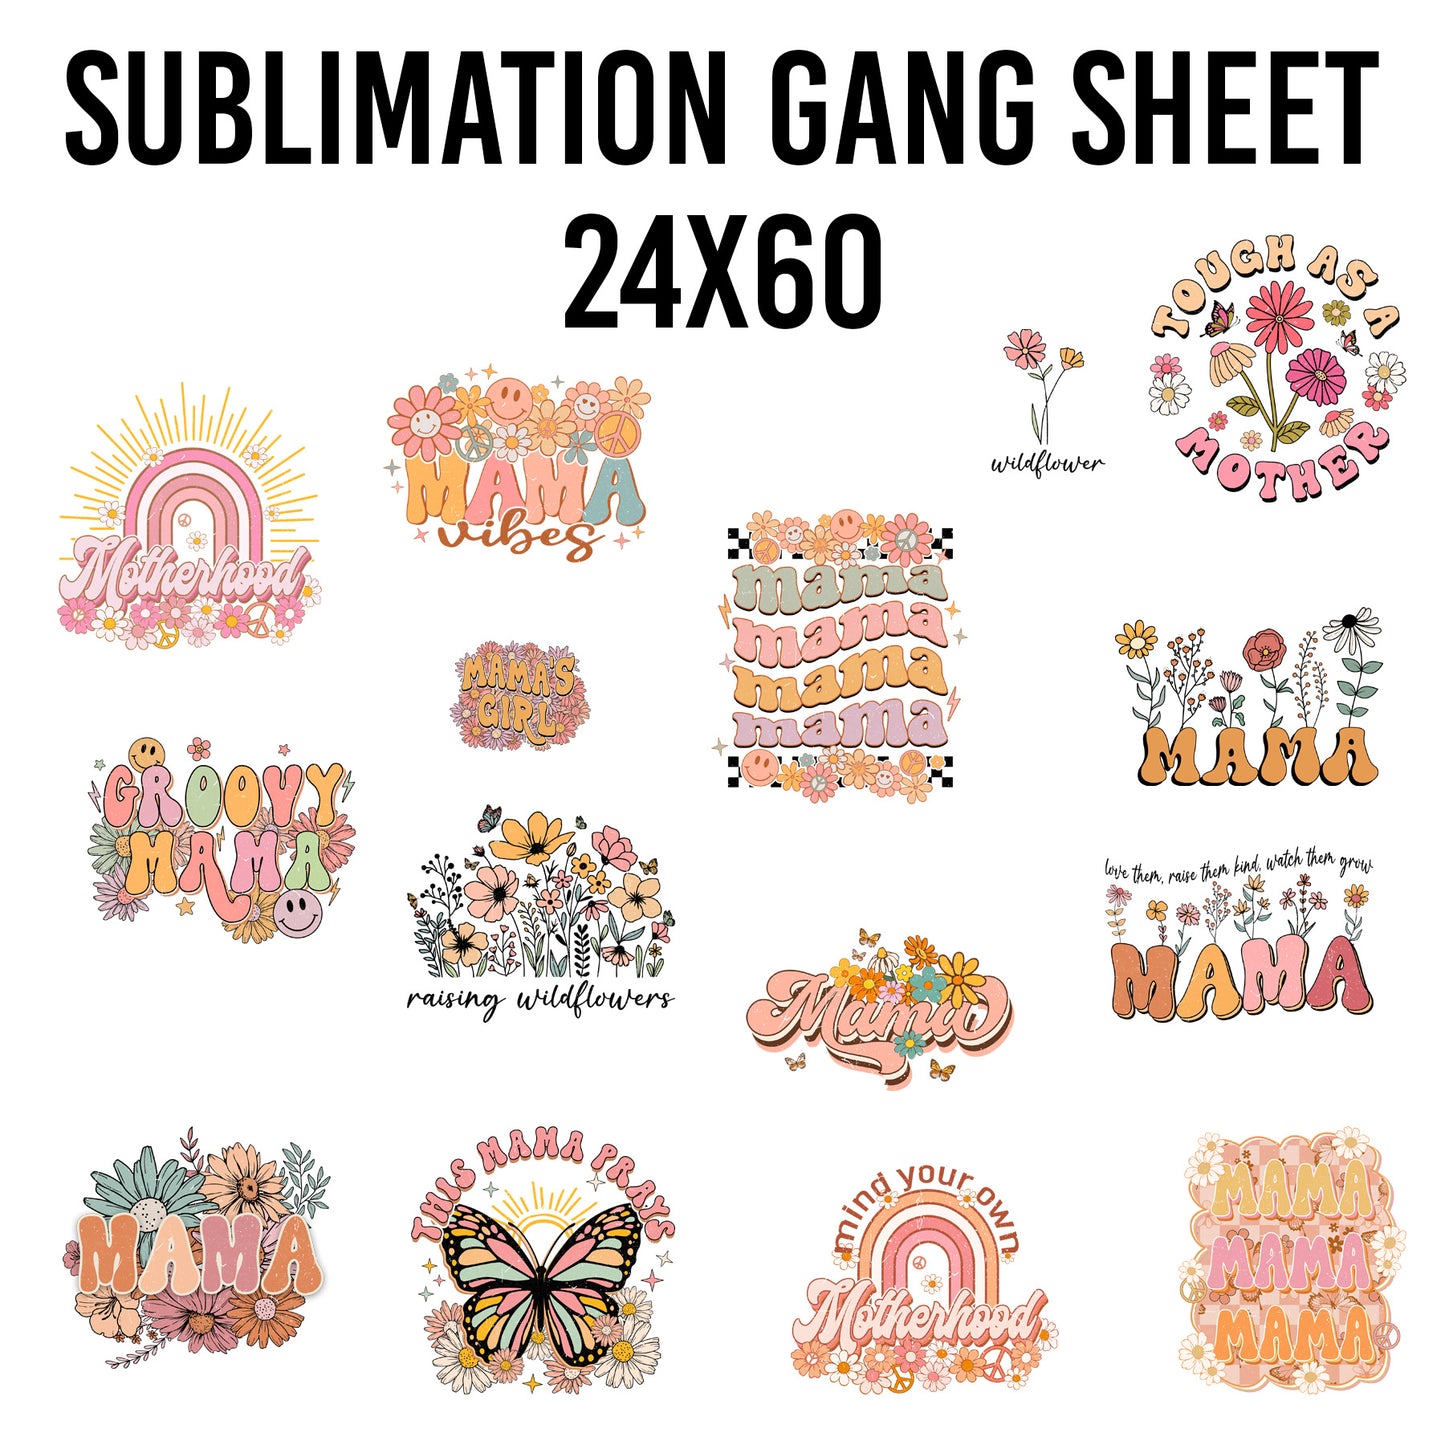 Retro Mama Sublimation 24x60 Gang Sheet